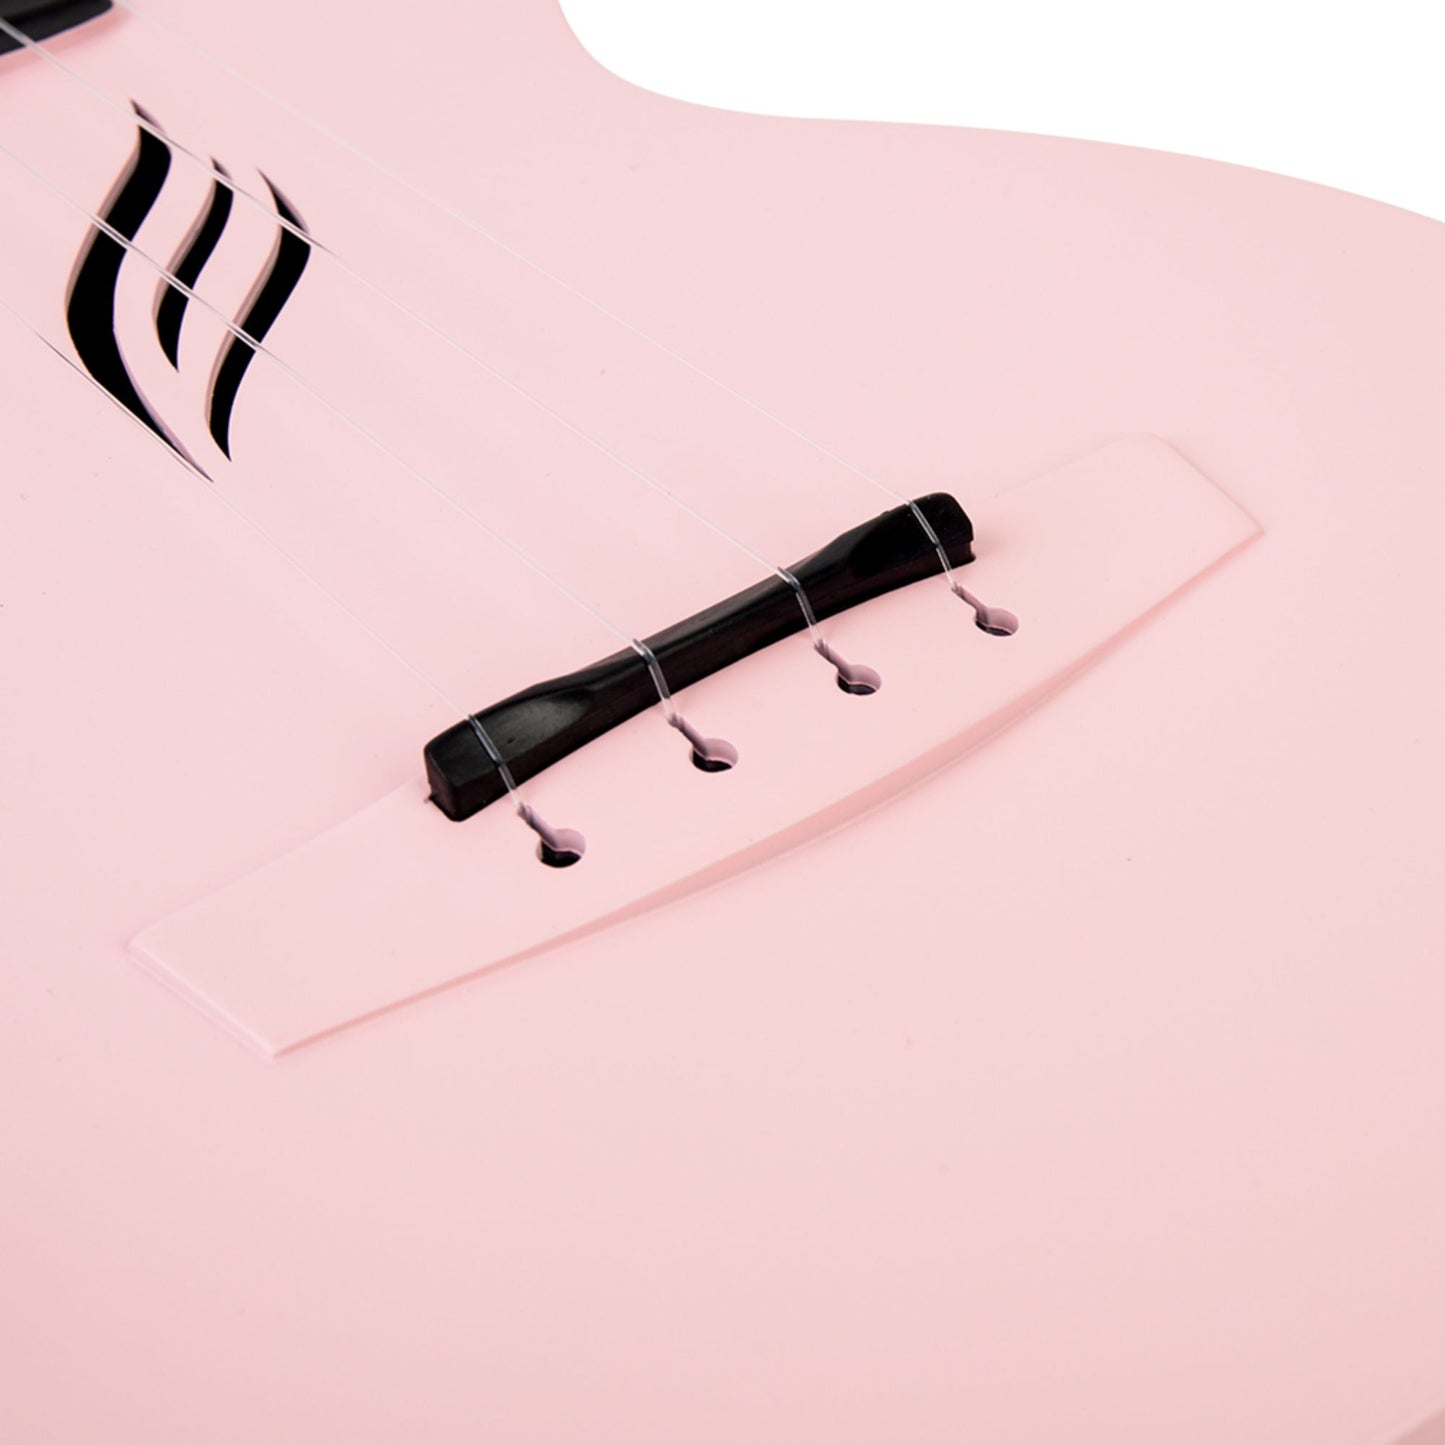 Enya Concert Nova UE Carbon Fiber Travel Ukulele with AcousticPlus- Pink